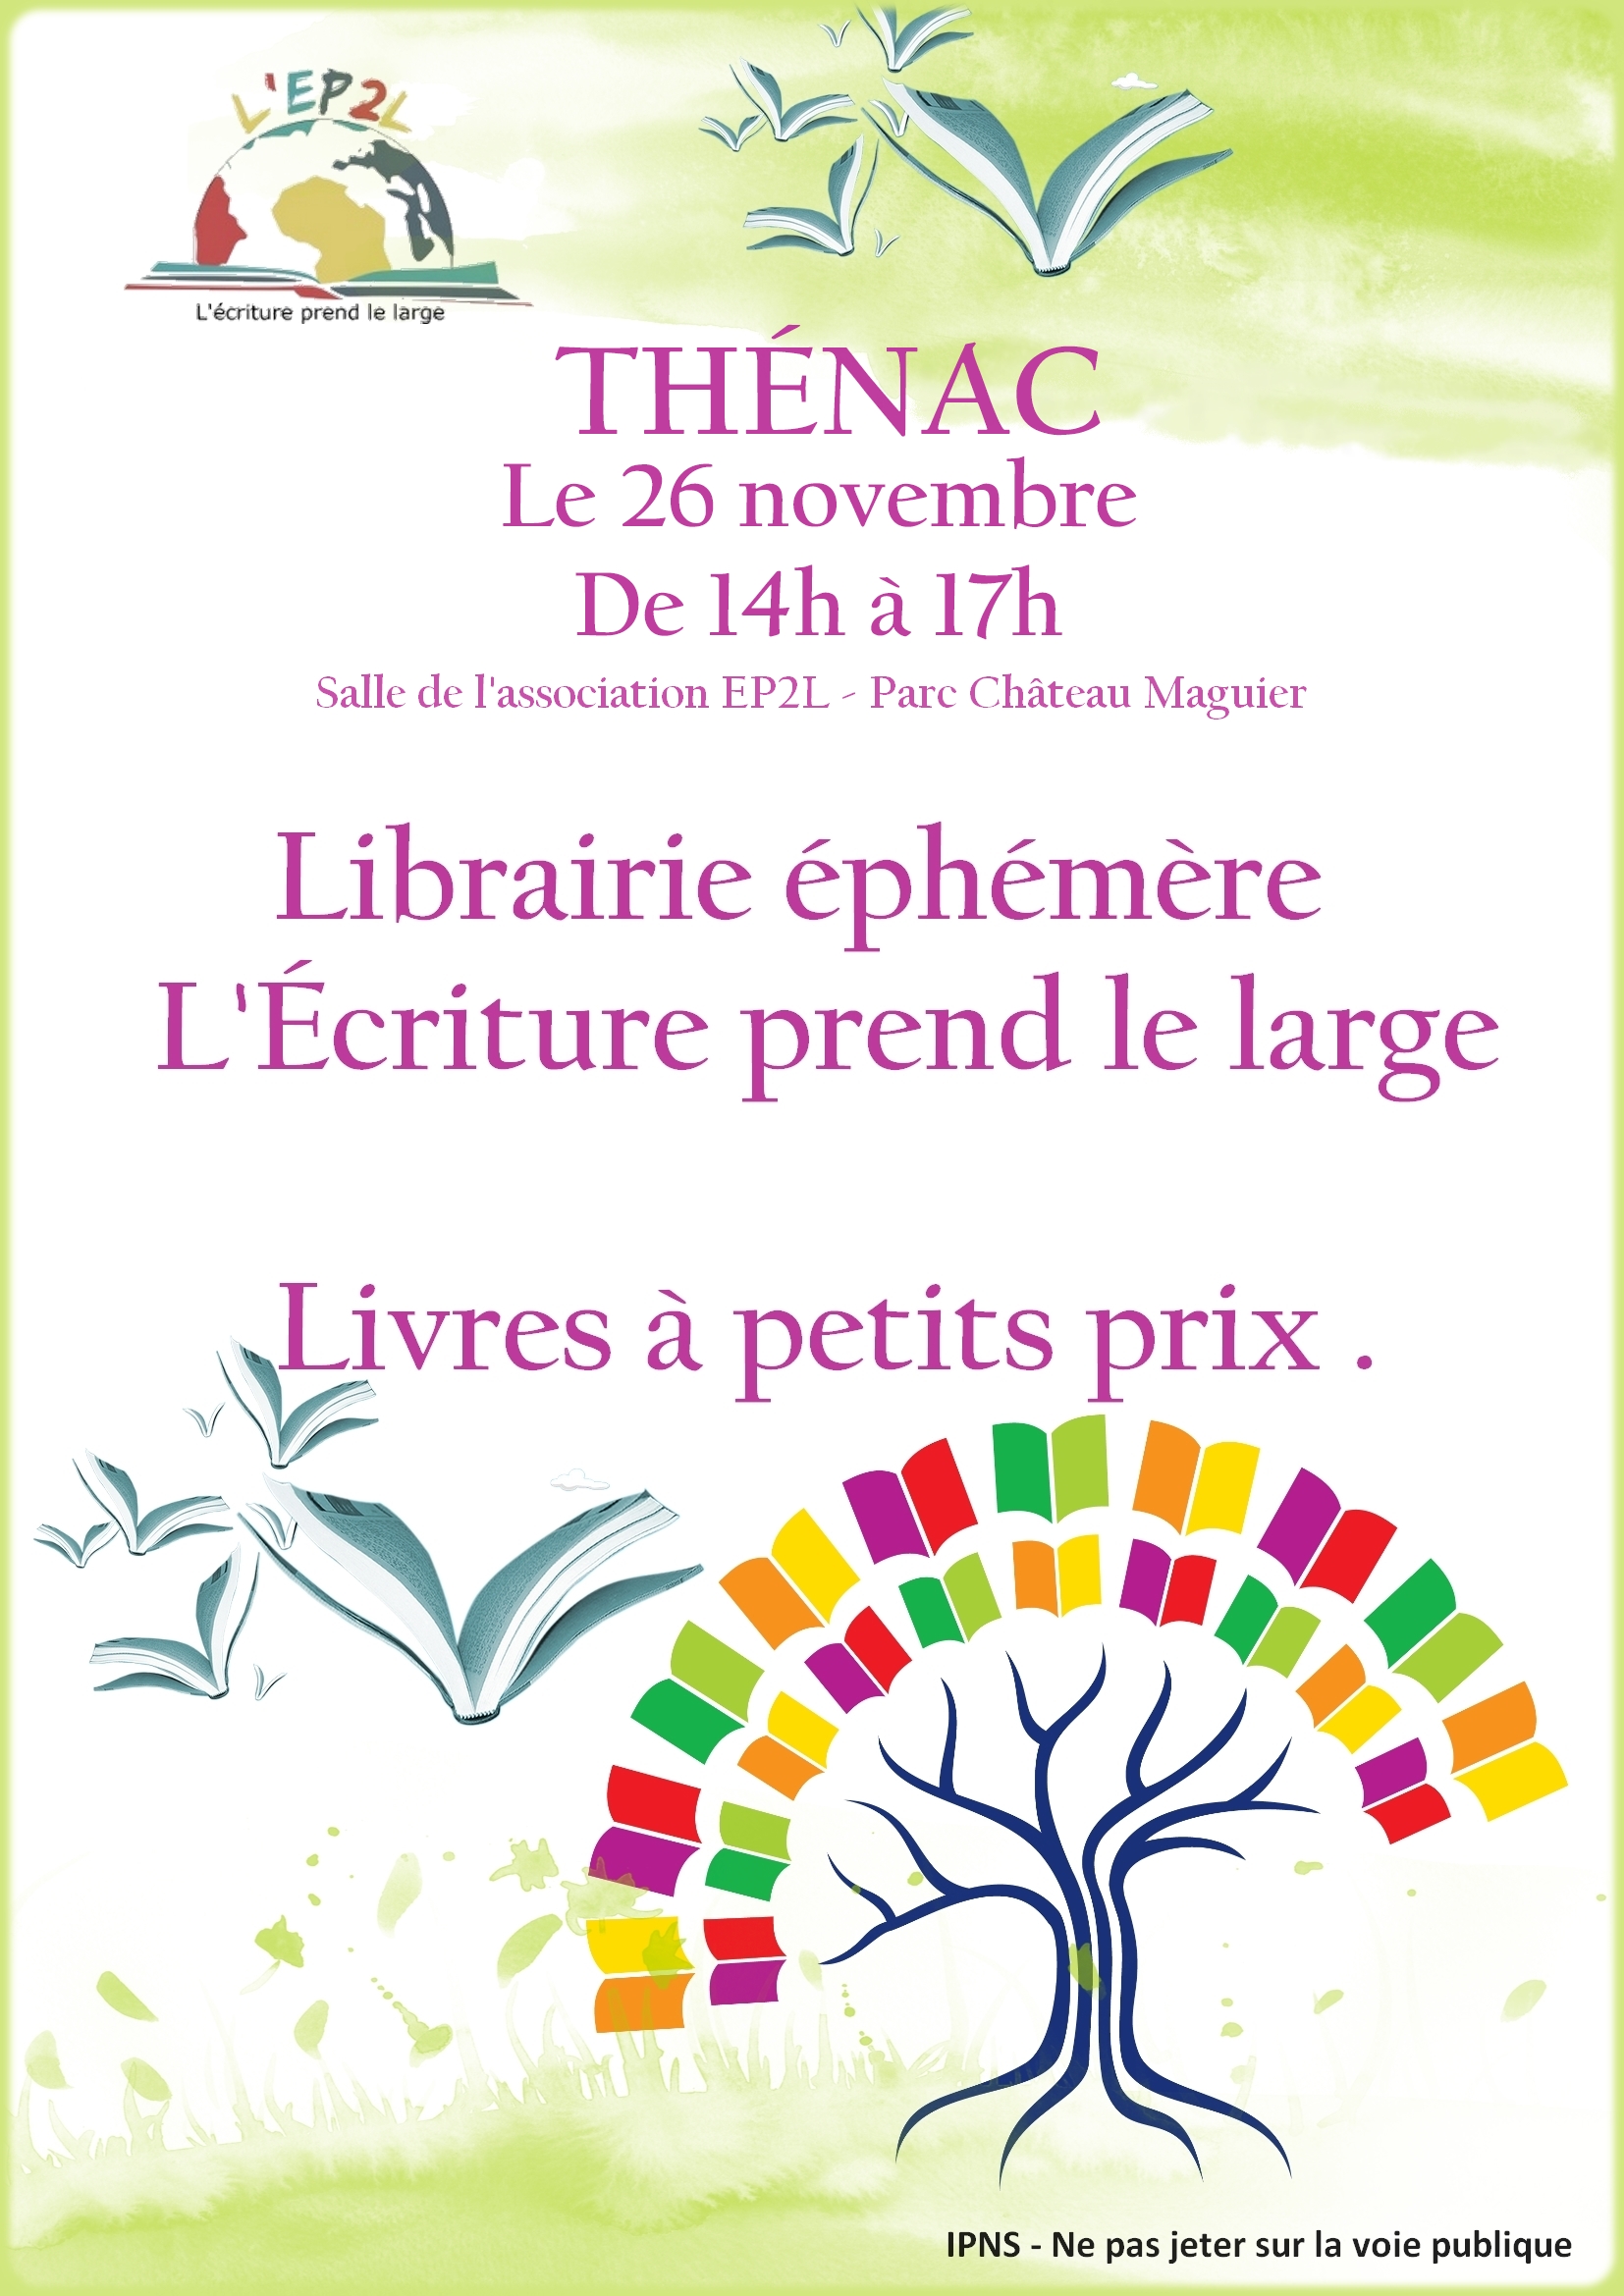 Affiche librairie éphémère EP2L 26 novembre Thénac 17